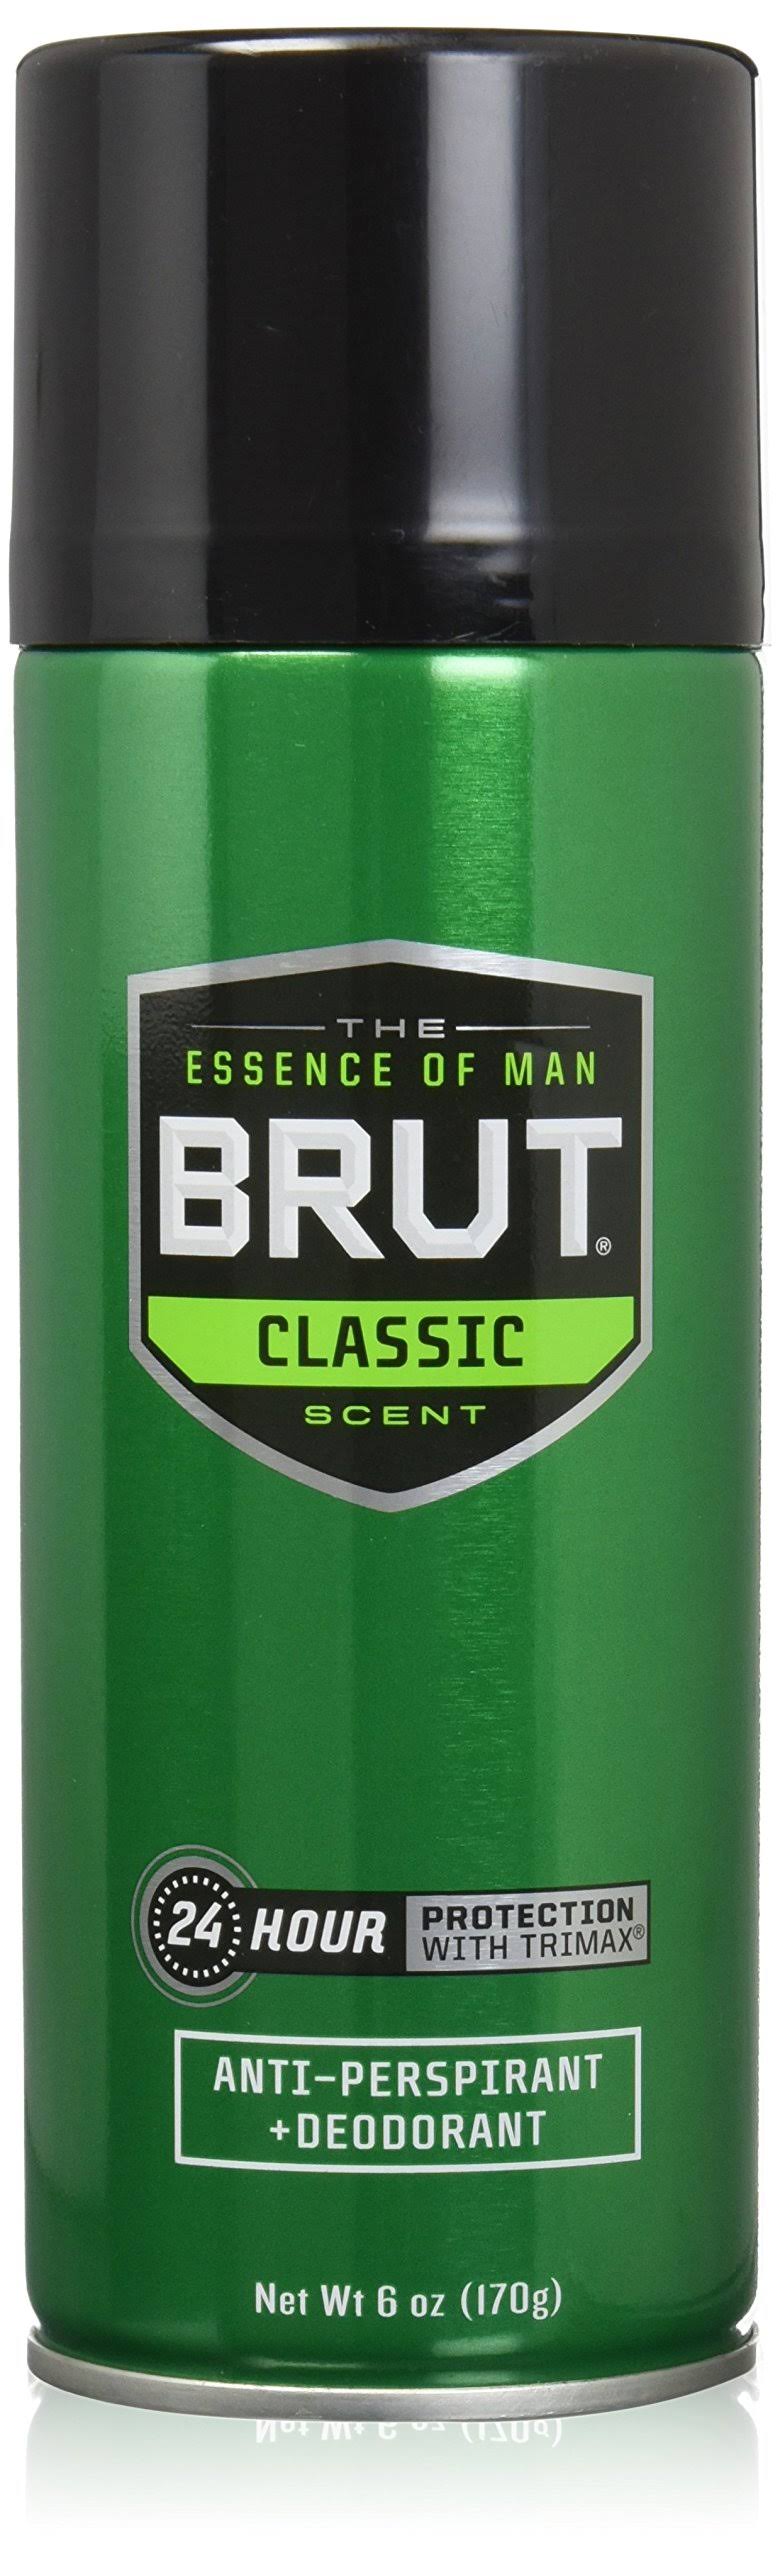 Brut Anti-Perspirant and Deodorant Spray - Original, 6oz